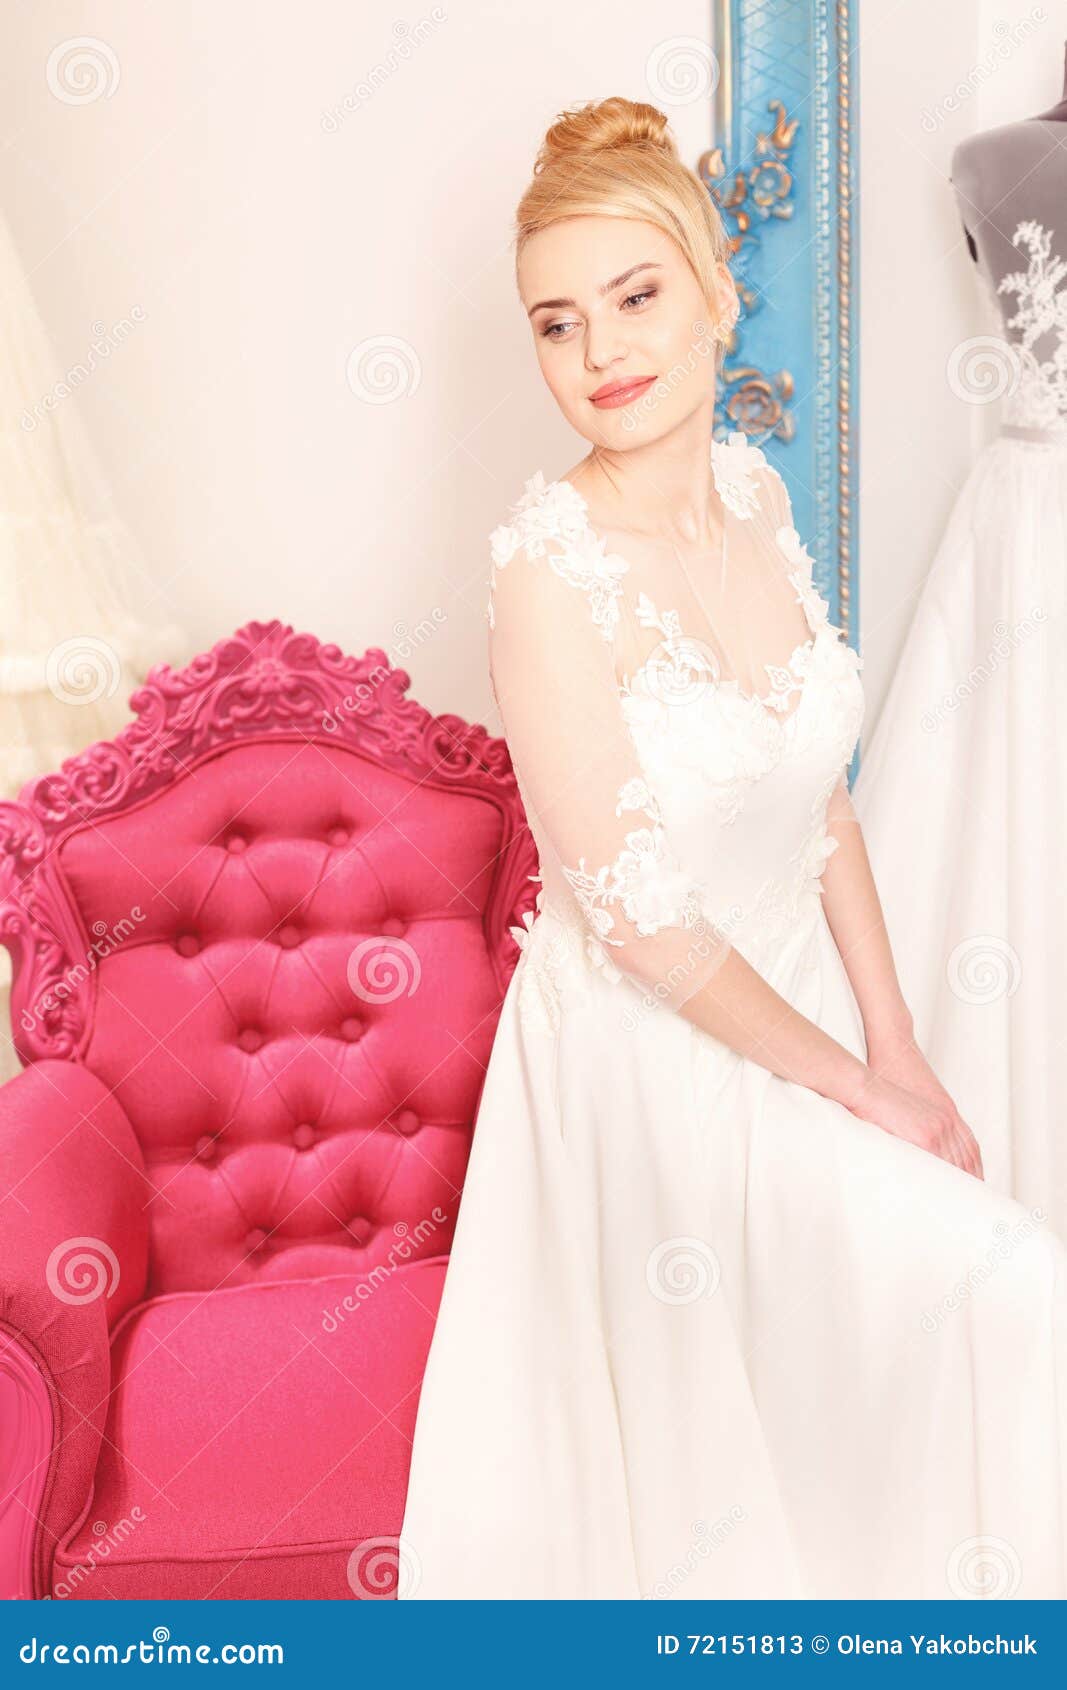 Cute Future Bride is Preparing for Wedding Stock Image - Image of ...